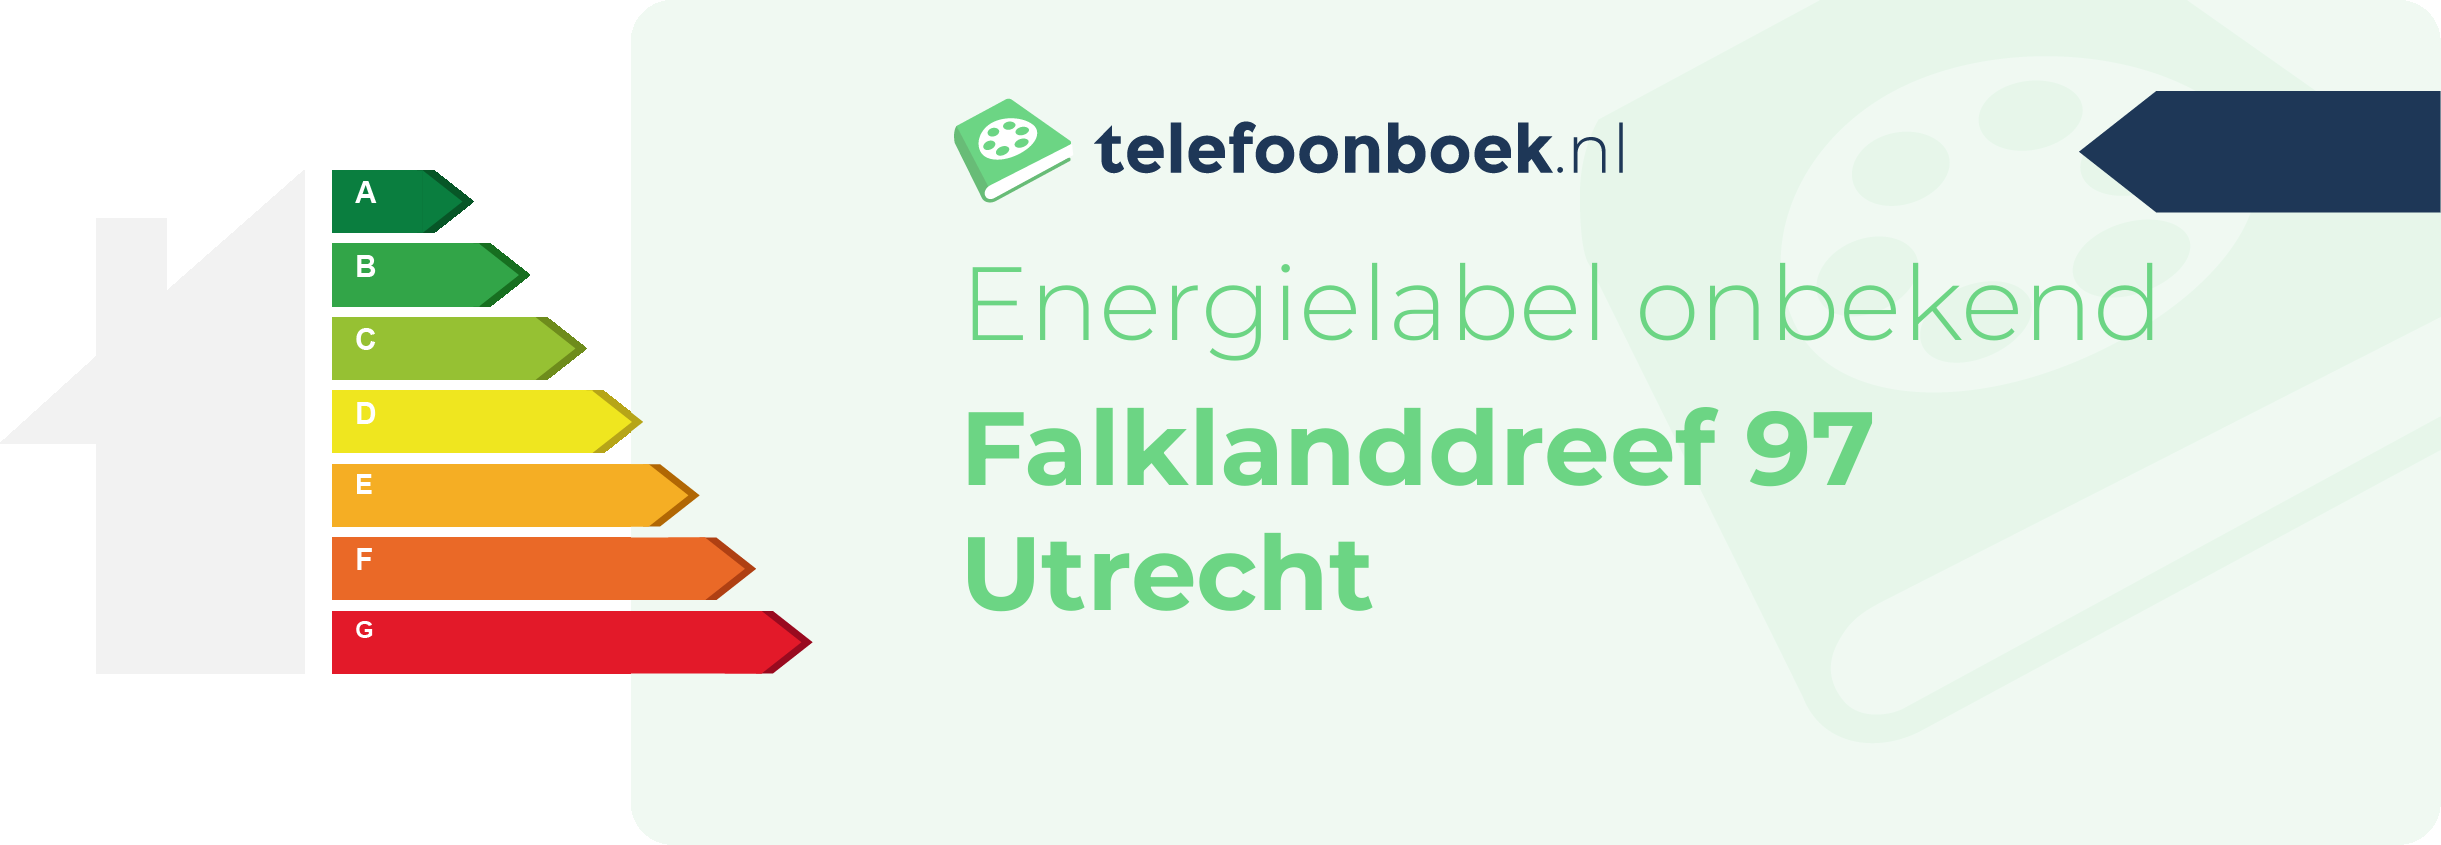 Energielabel Falklanddreef 97 Utrecht